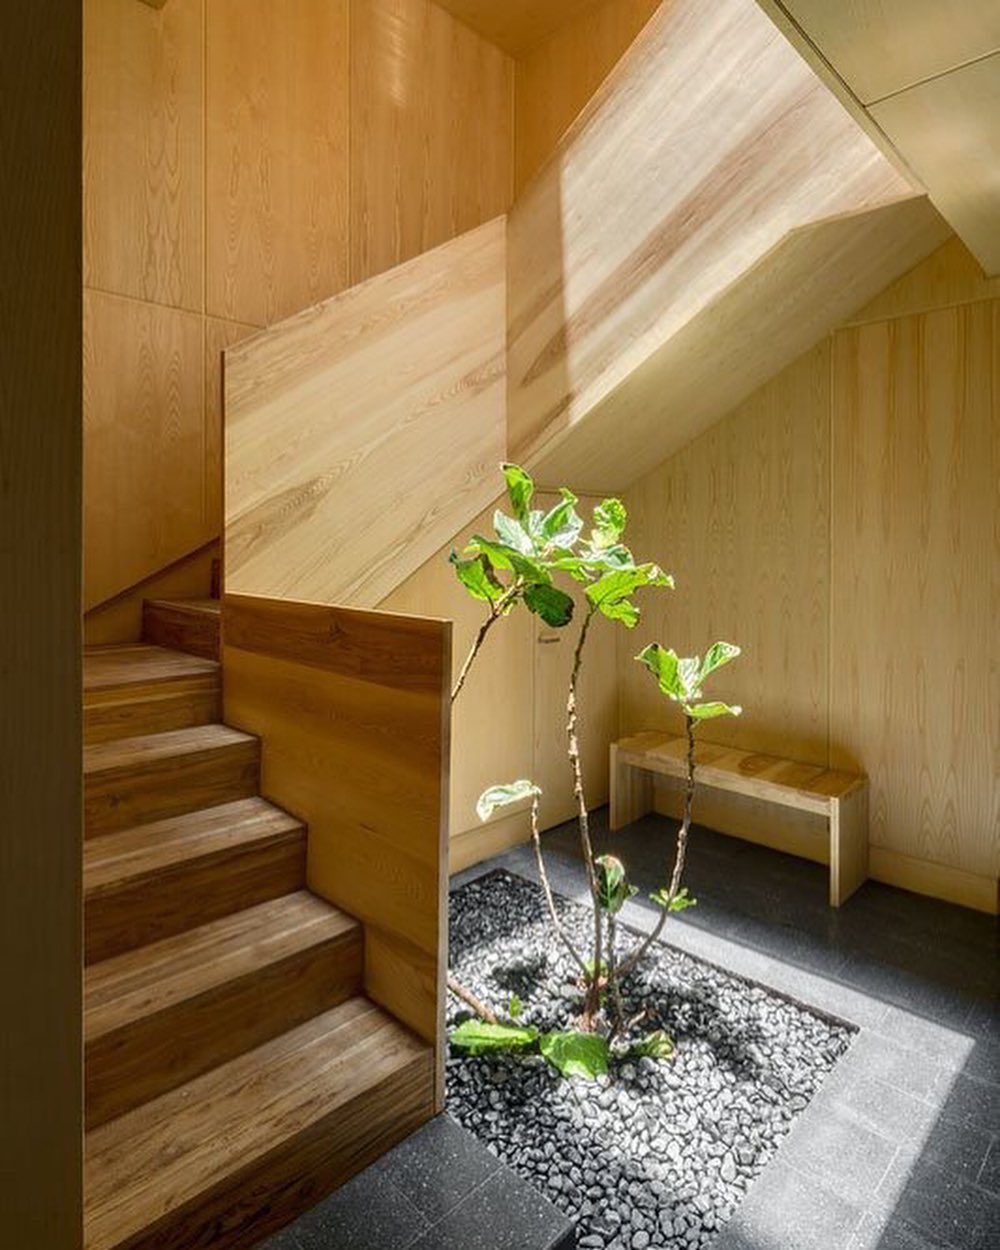 8 ide membuat taman kecil di sudut rumah minimalis